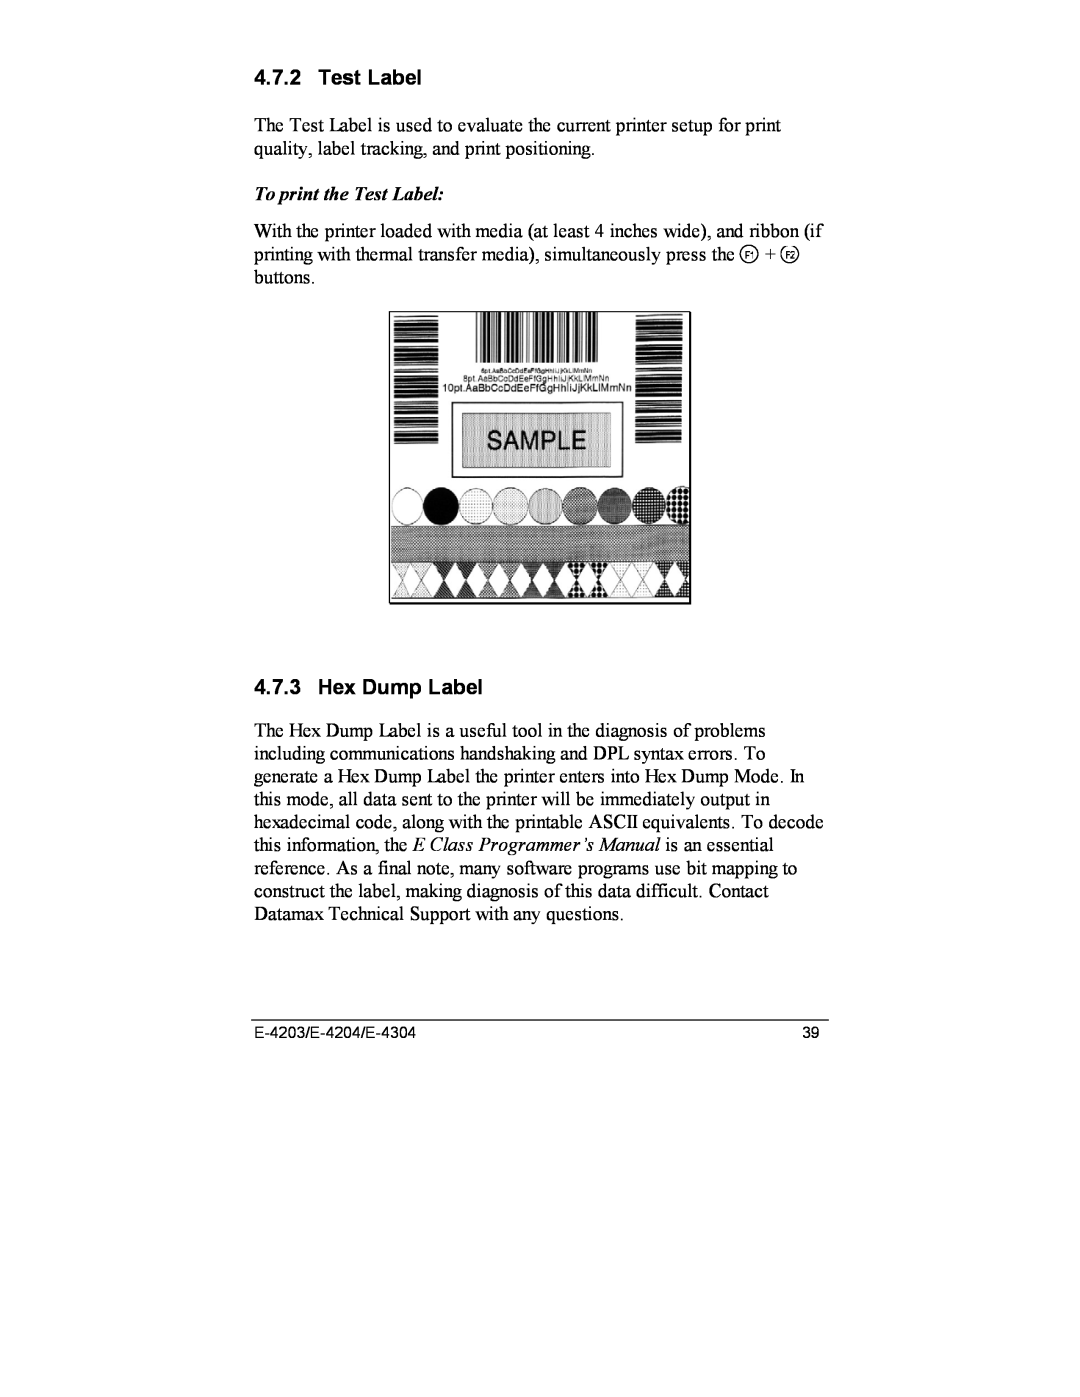 Datamax E-4204, E-4203, E-4304e manual Hex Dump Label, To print the Test Label 